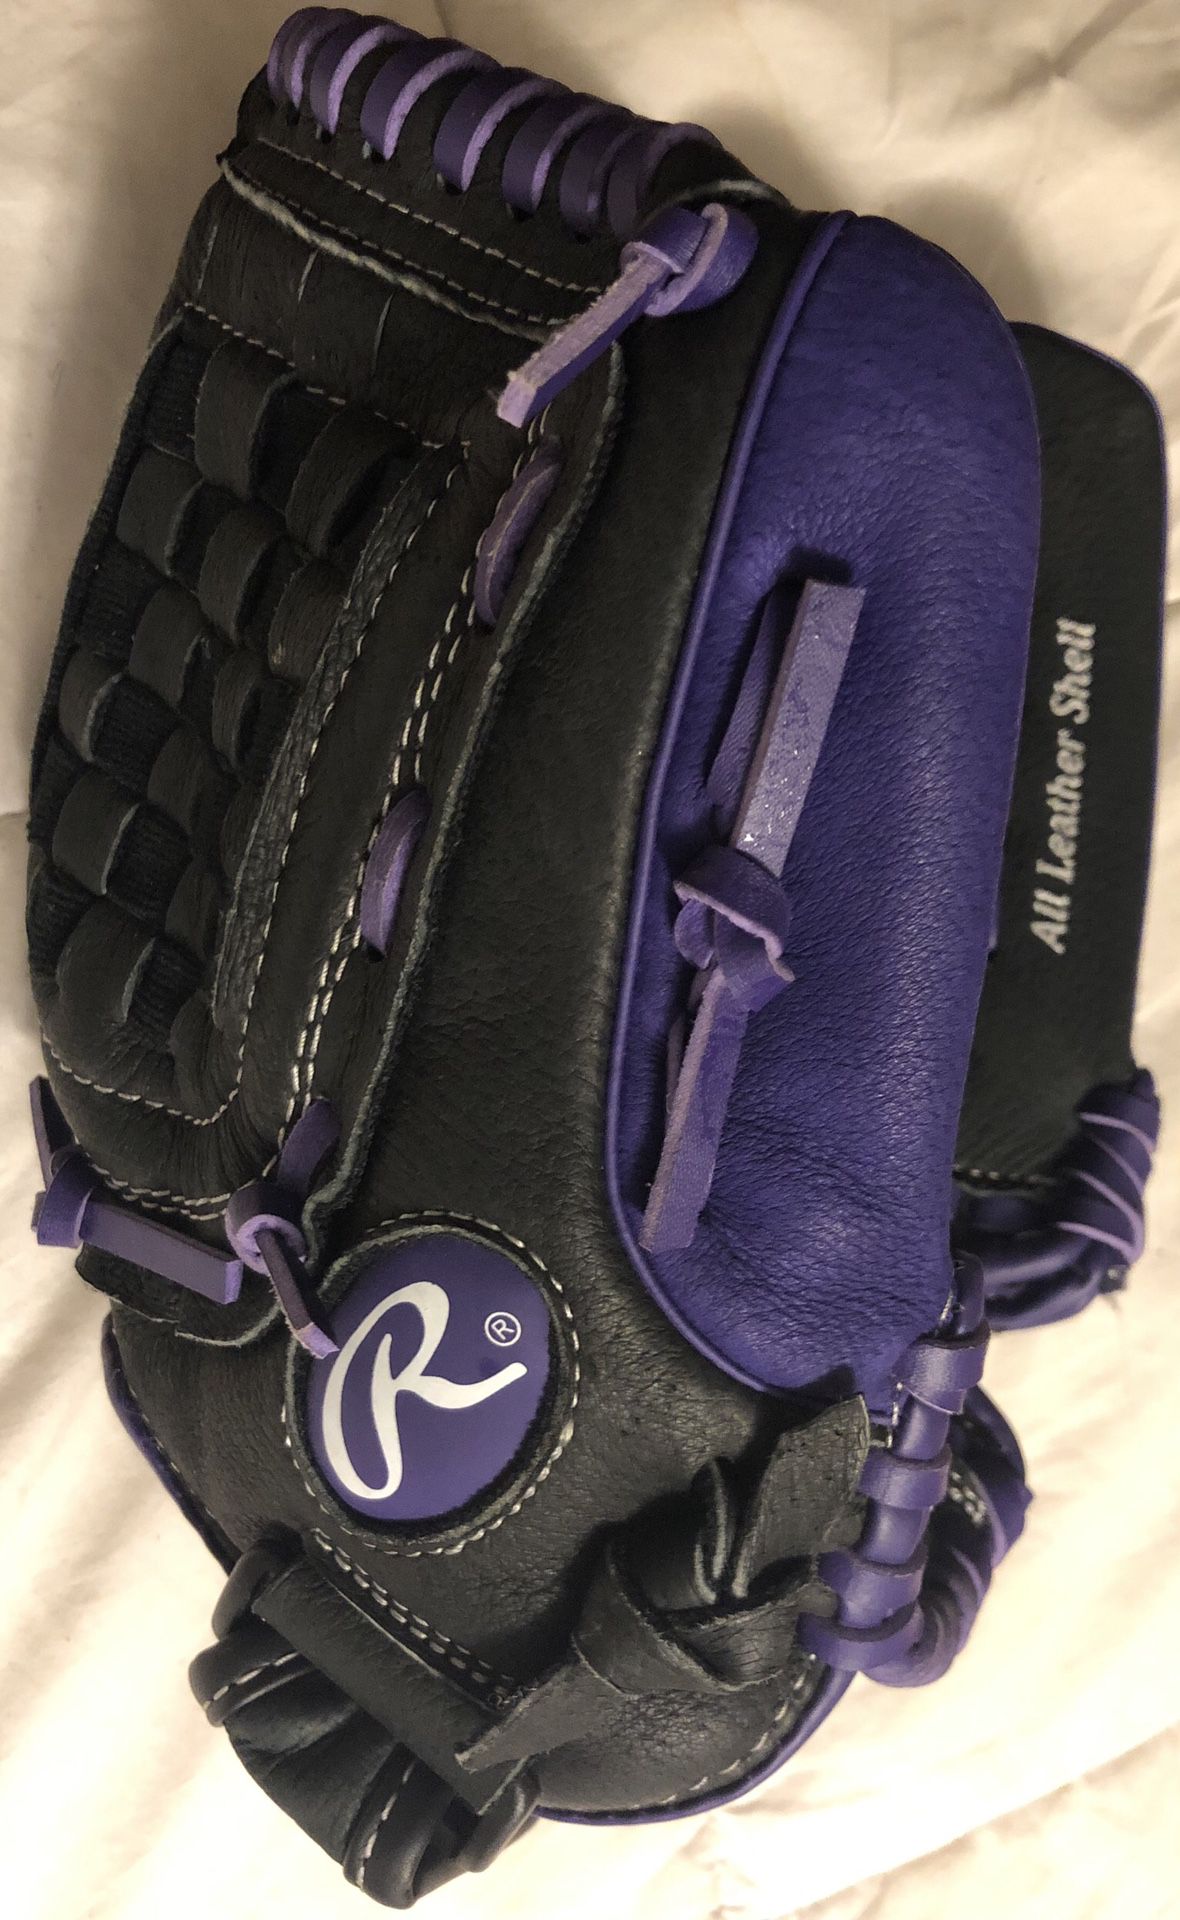 Rawlings Highlight Series Softball Glove